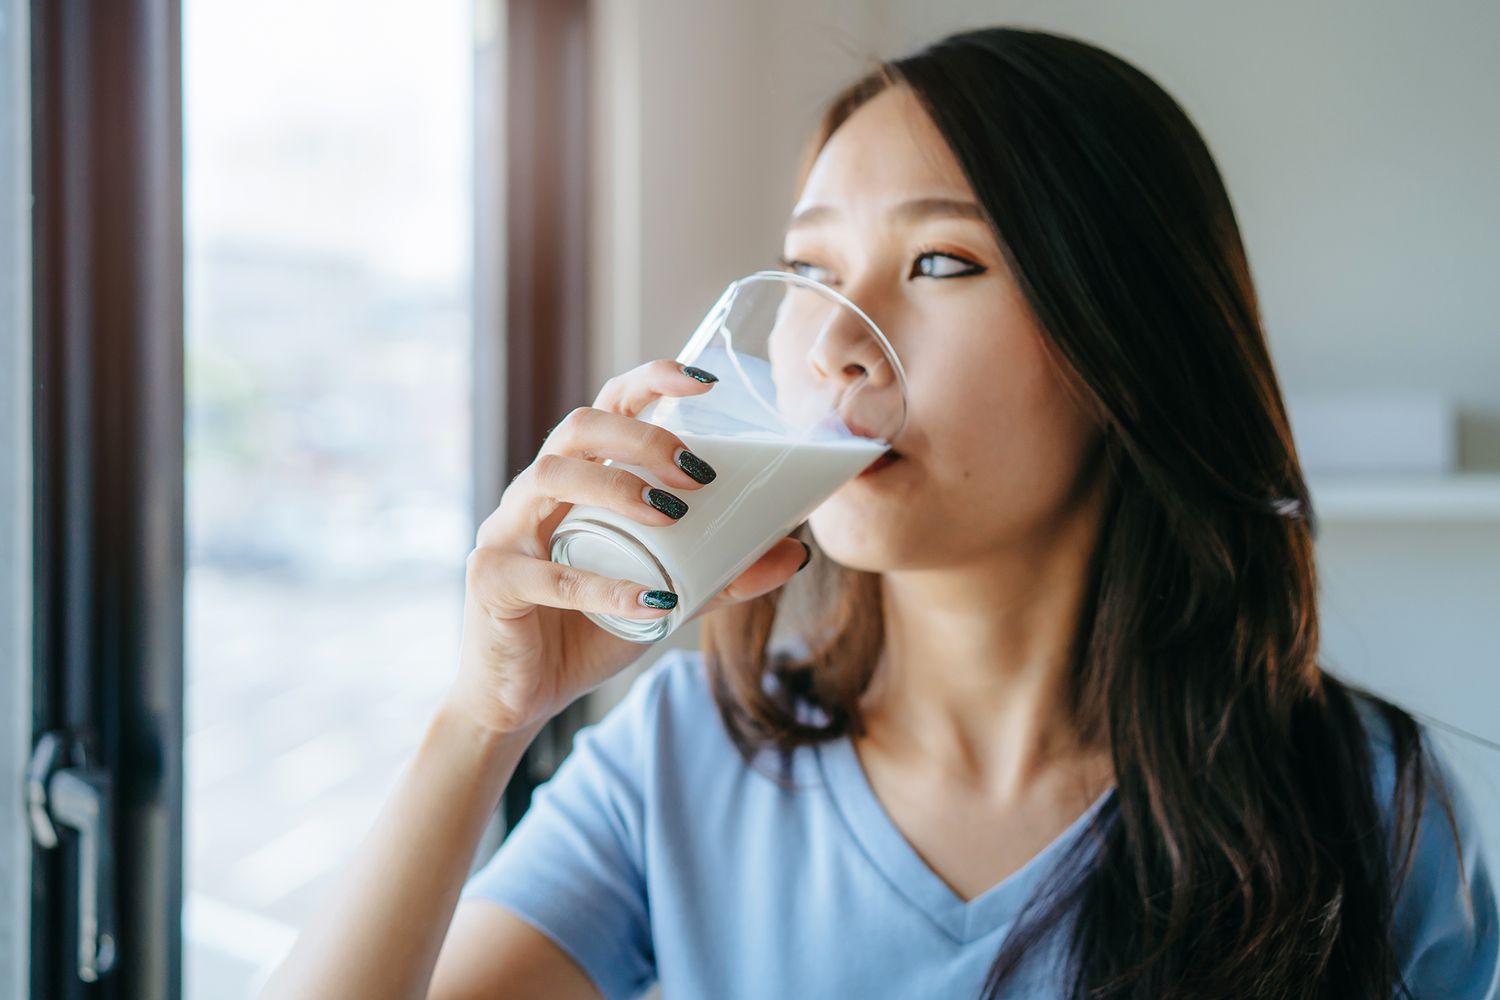 Can Milk Relieve Heartburn?